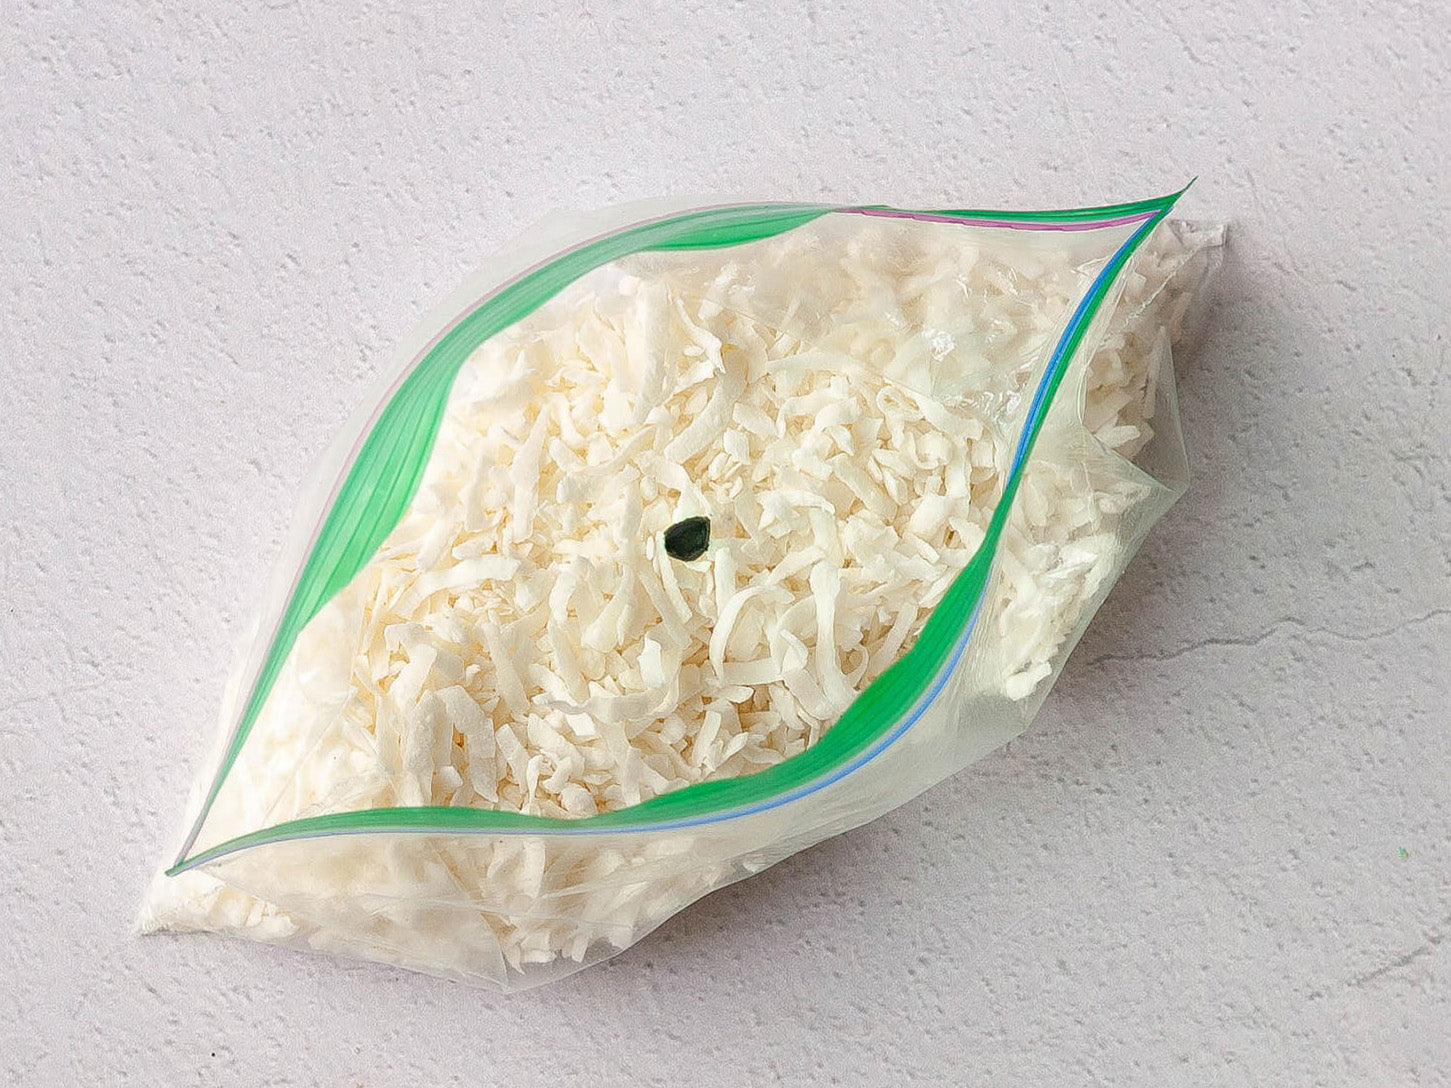 Shredded coconut in a plastic bag